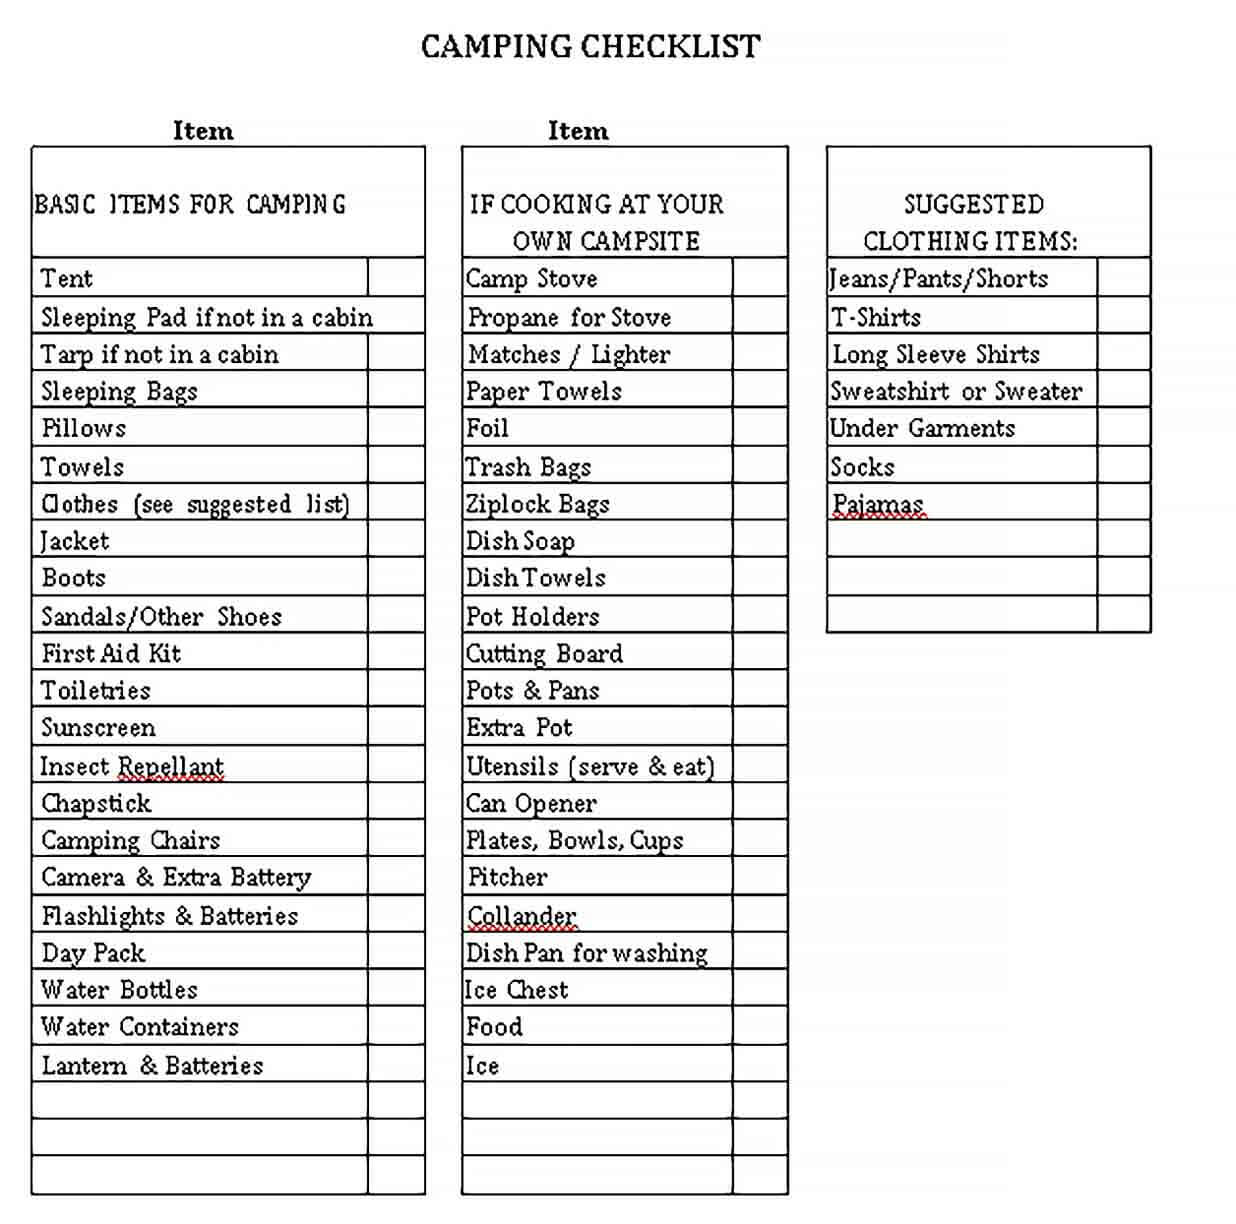 Sample Camping Item Checklist Template